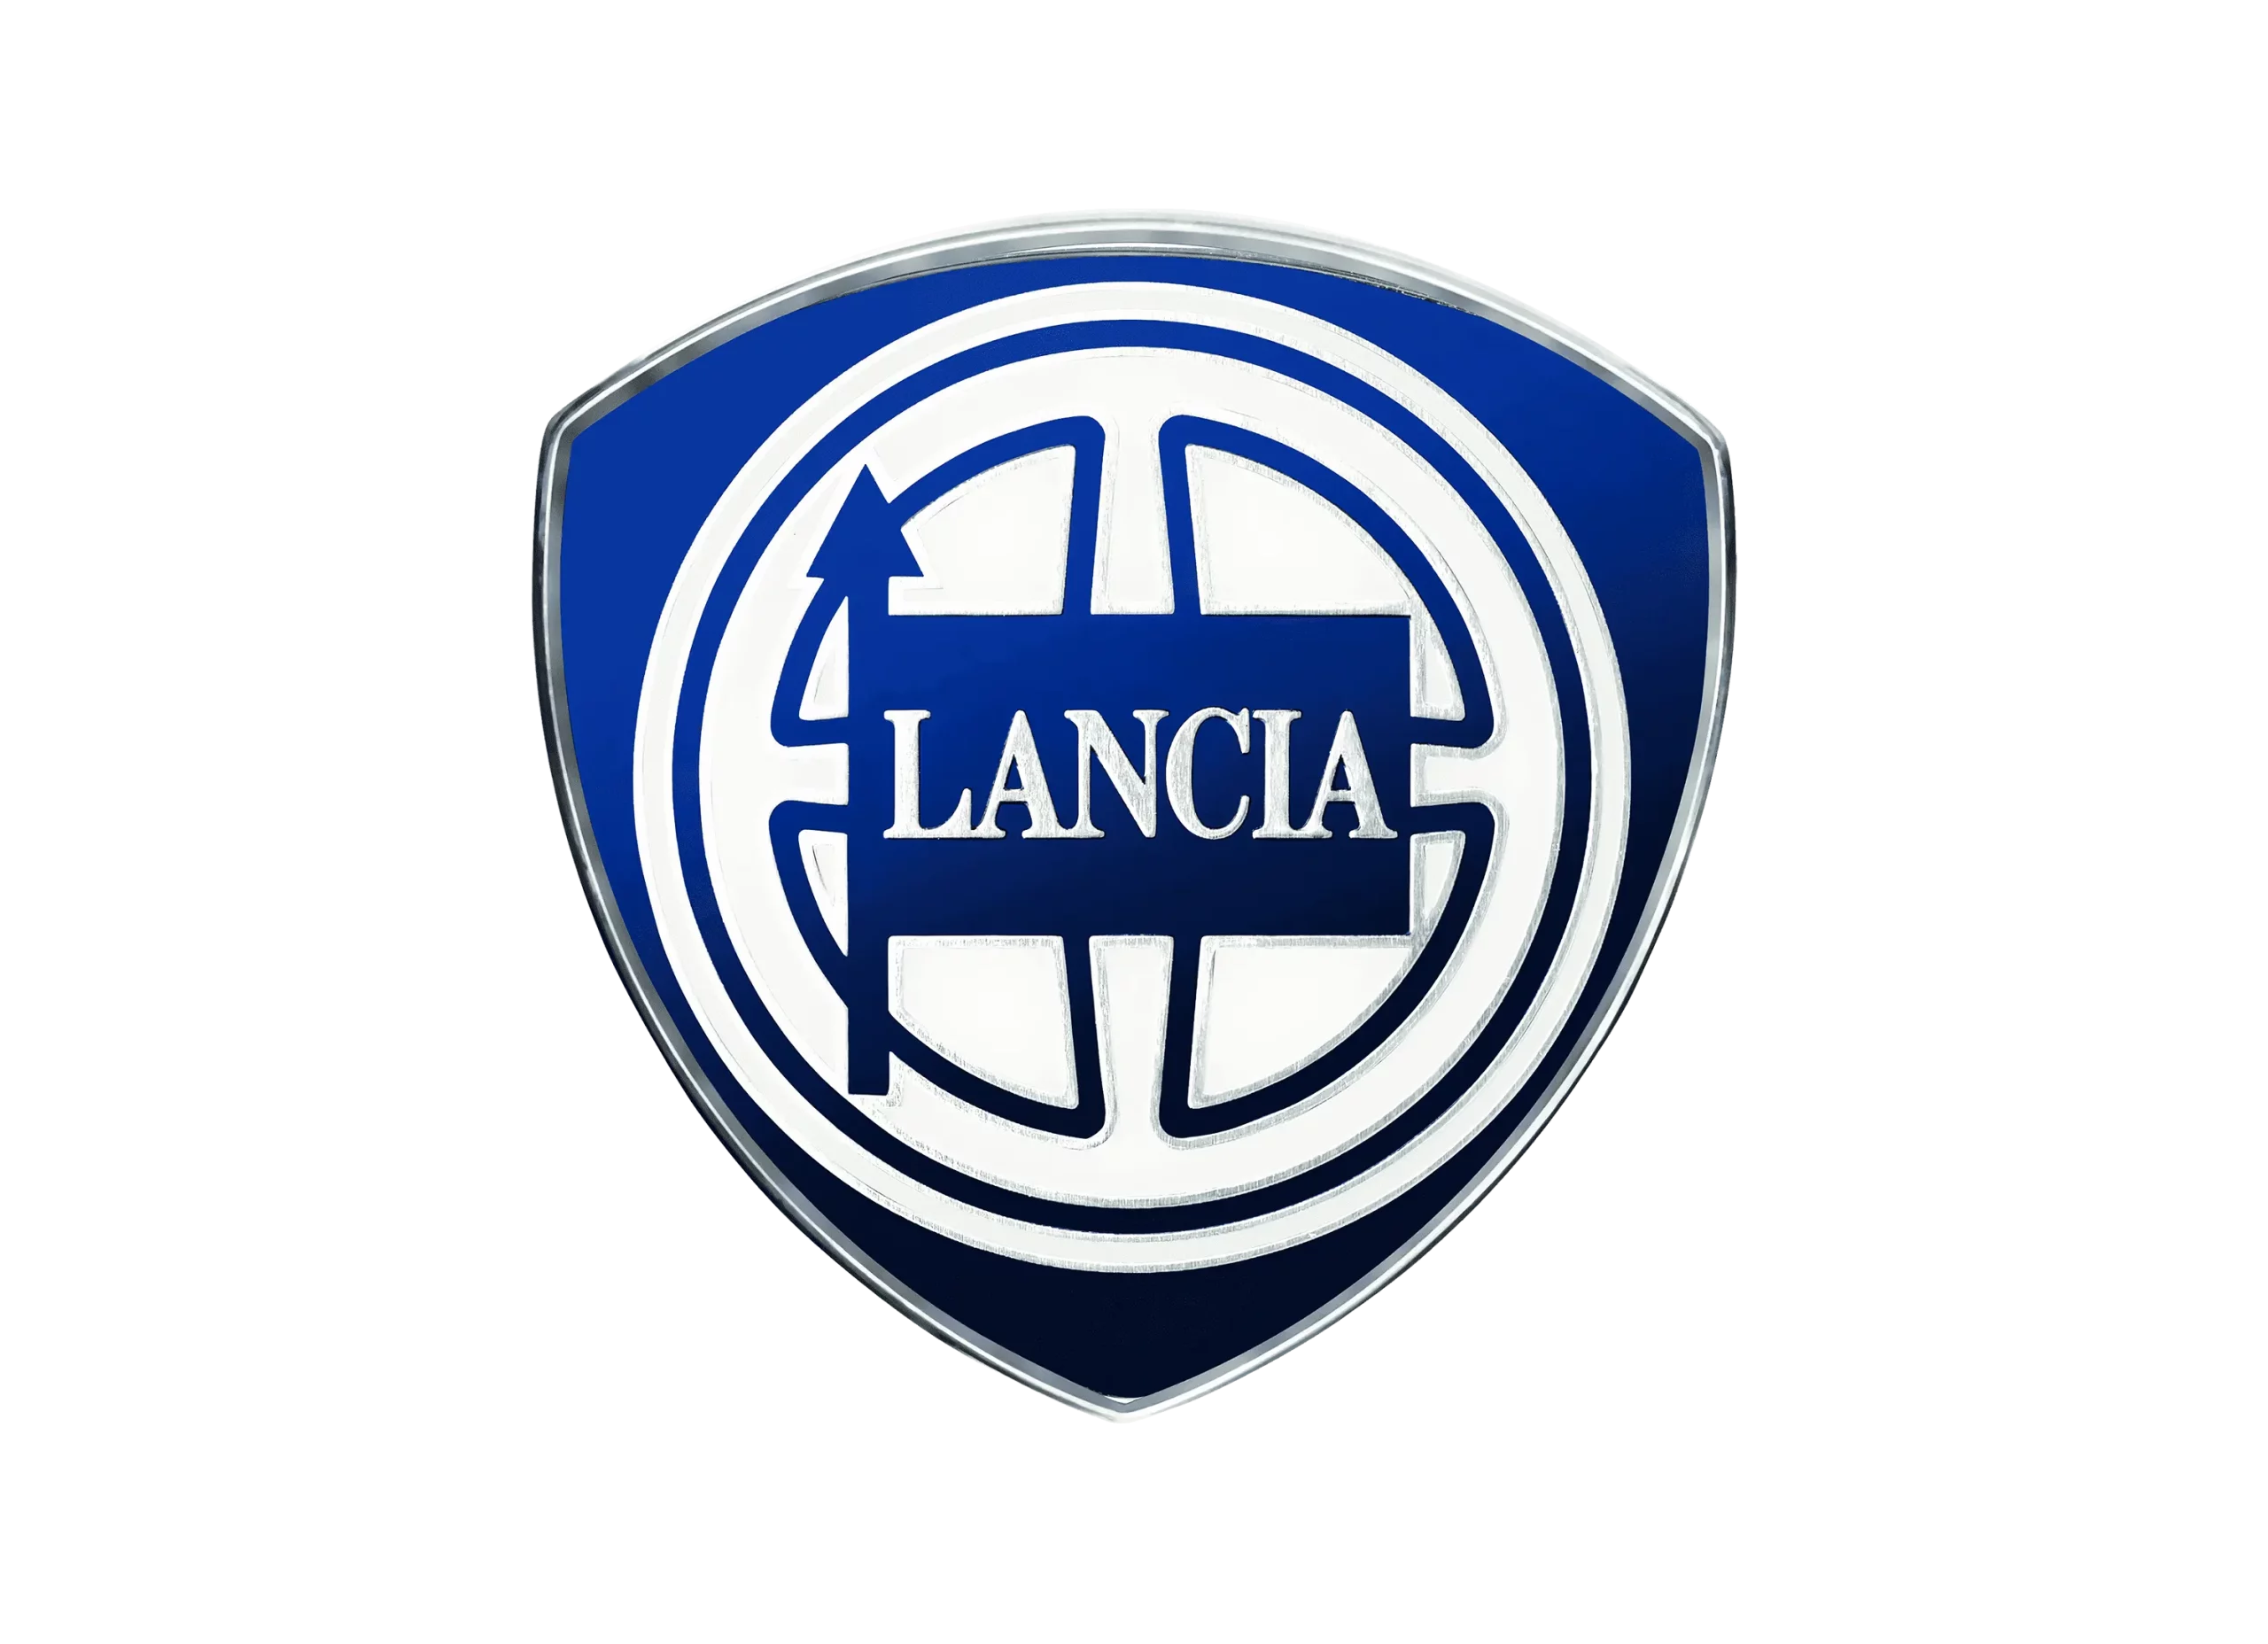 Lancia logo 1974-2001